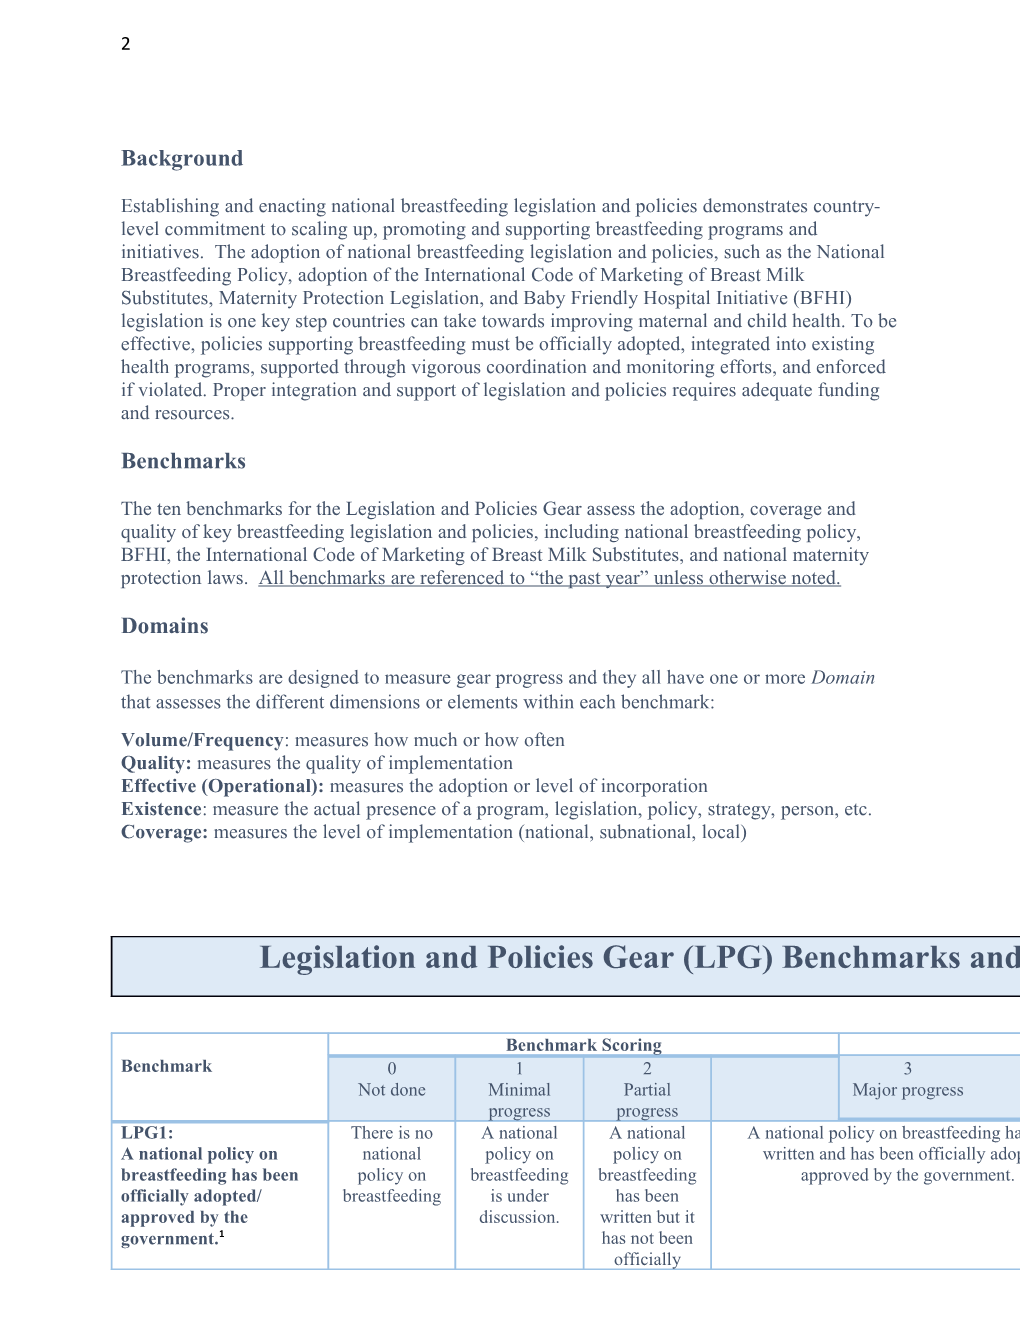 Legislation and Policies Gear